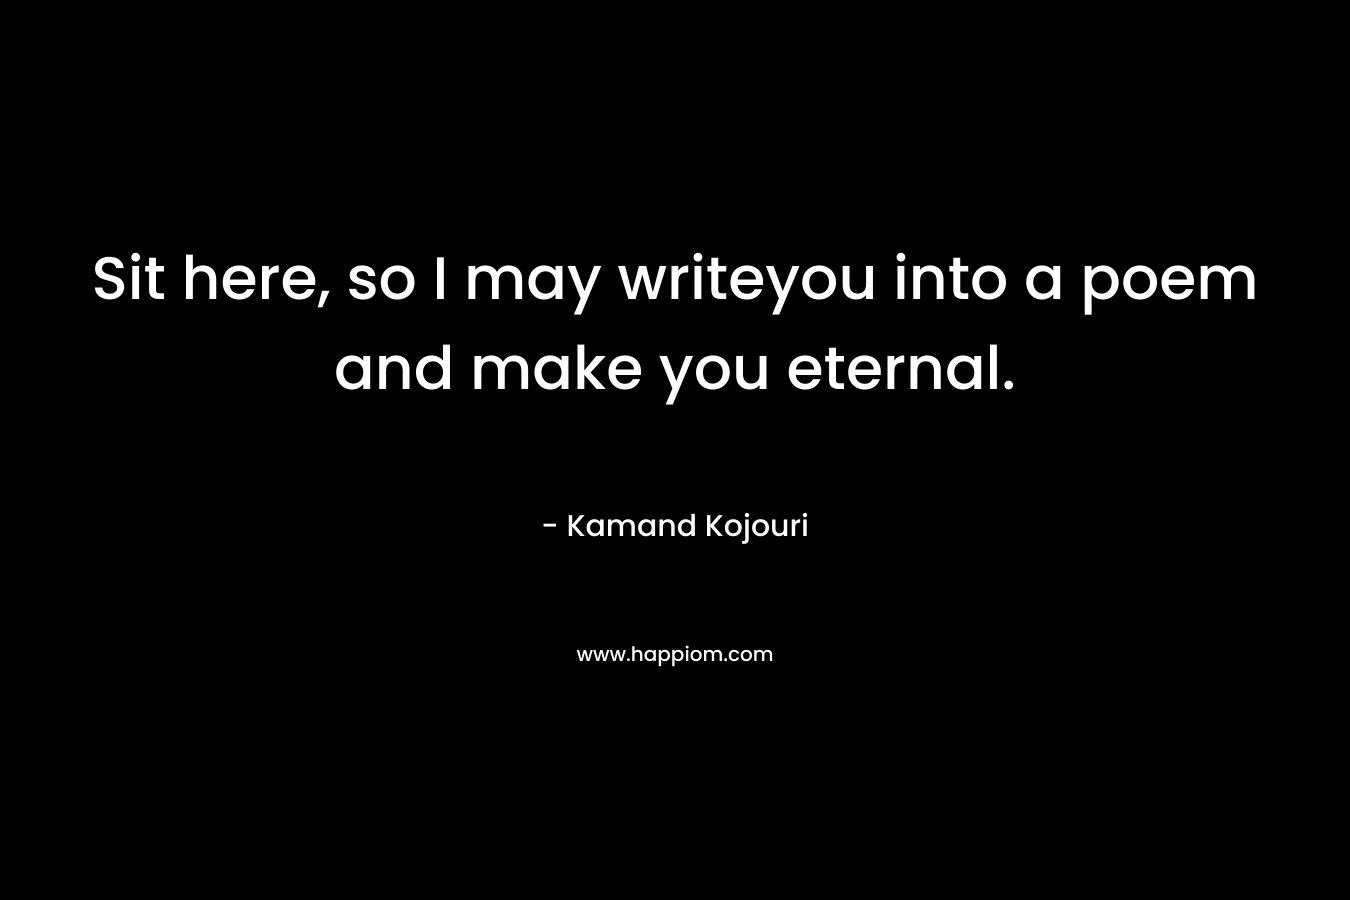 Sit here, so I may writeyou into a poem and make you eternal. – Kamand Kojouri